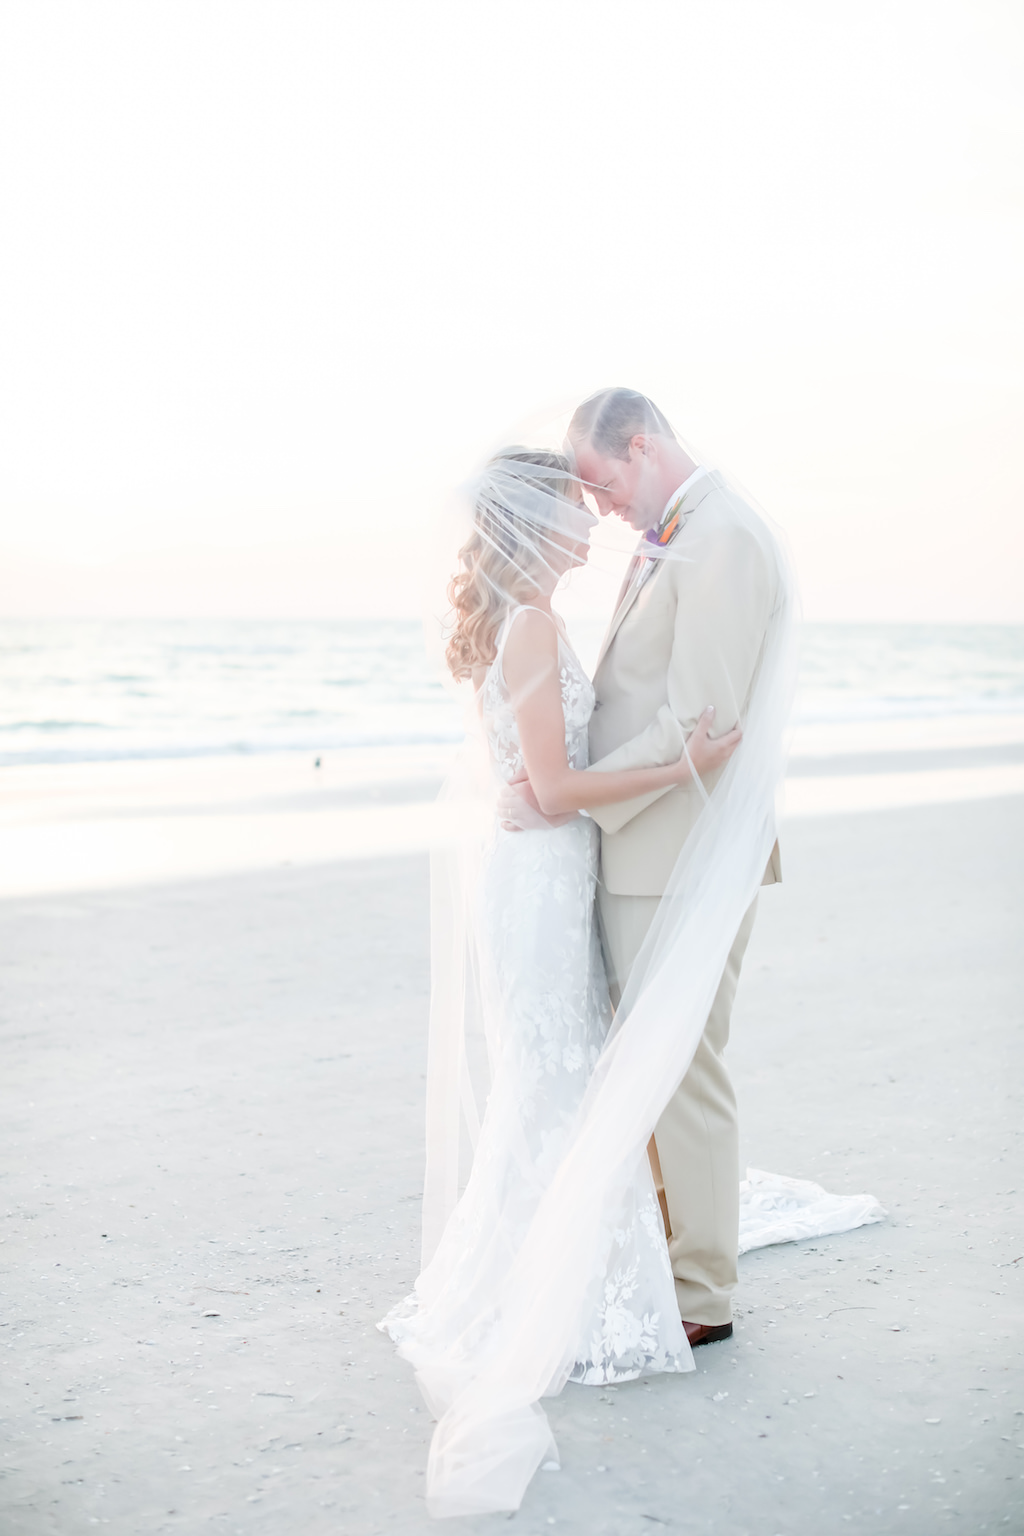 Florida Bride and Groom Wedding Portrait | St. Pete Beach Wedding Venue Hotel Zamora | Tampa Bay Wedding Photographer Lifelong Photography Studios